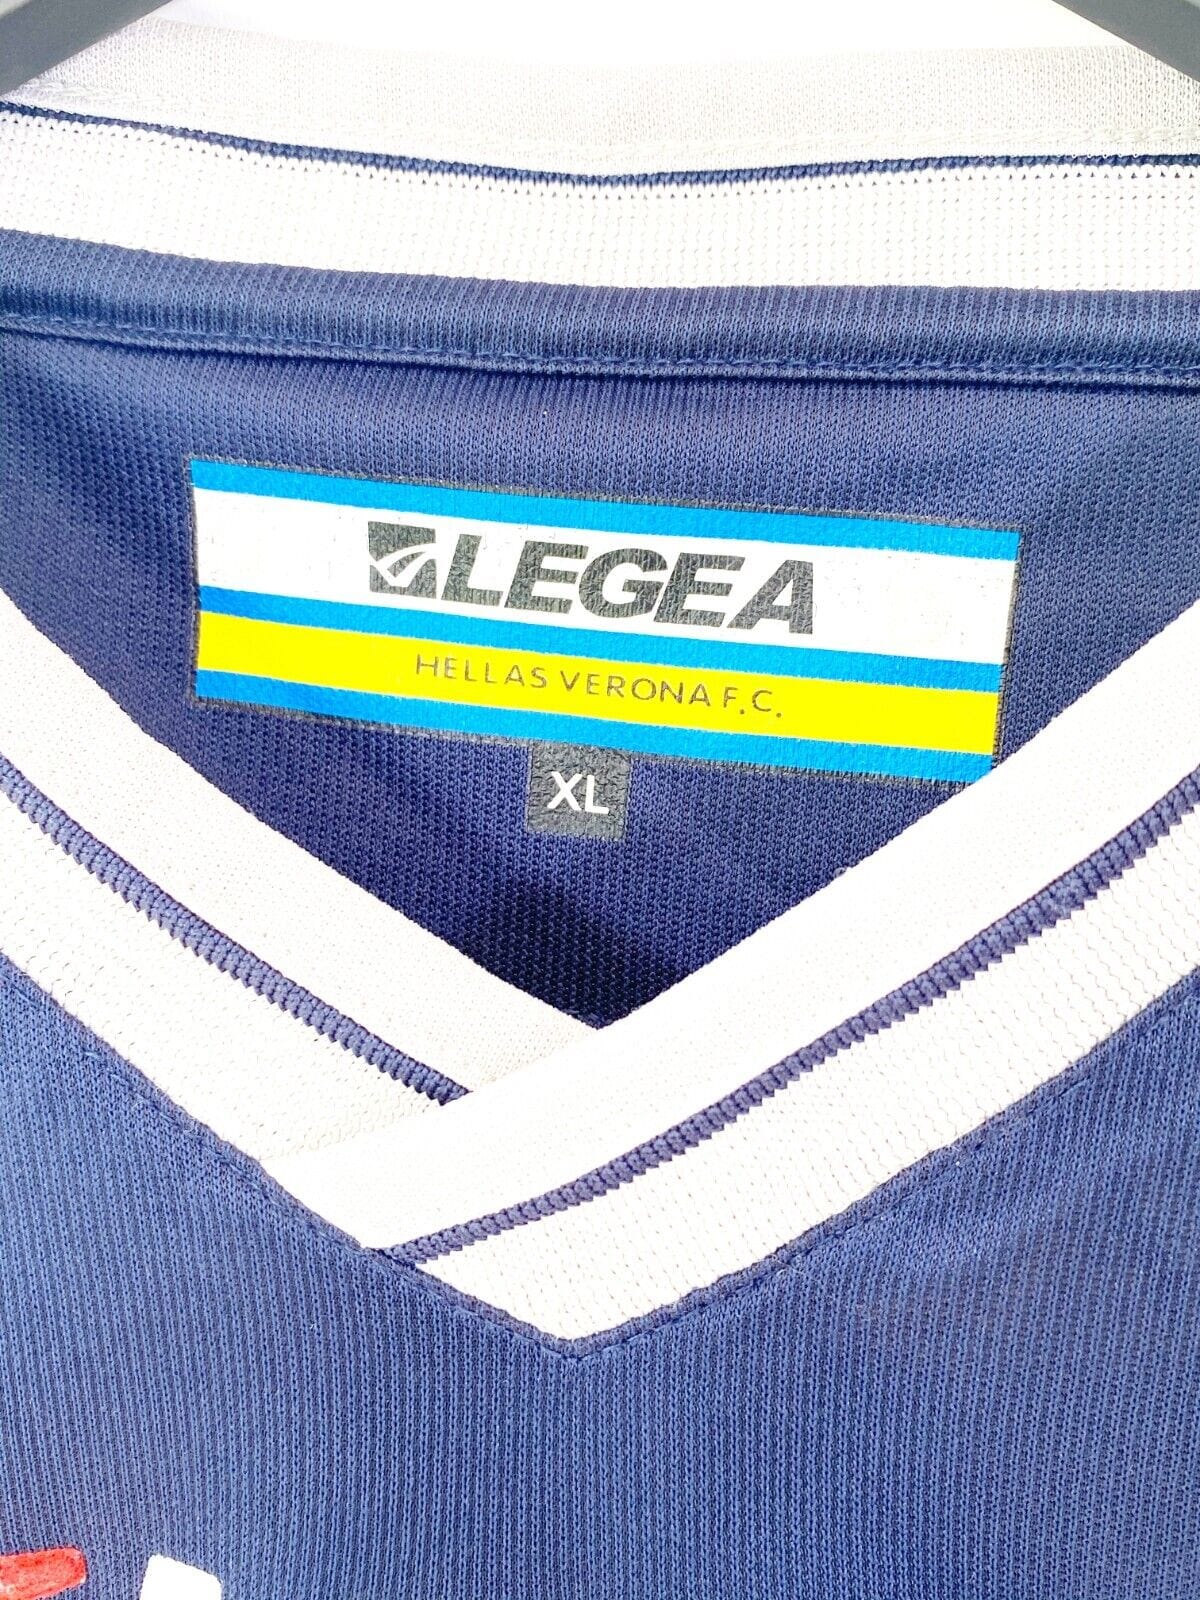 2003/04 HELLAS VERONA Vintage Legea Training Football Shirt Jersey (XL)